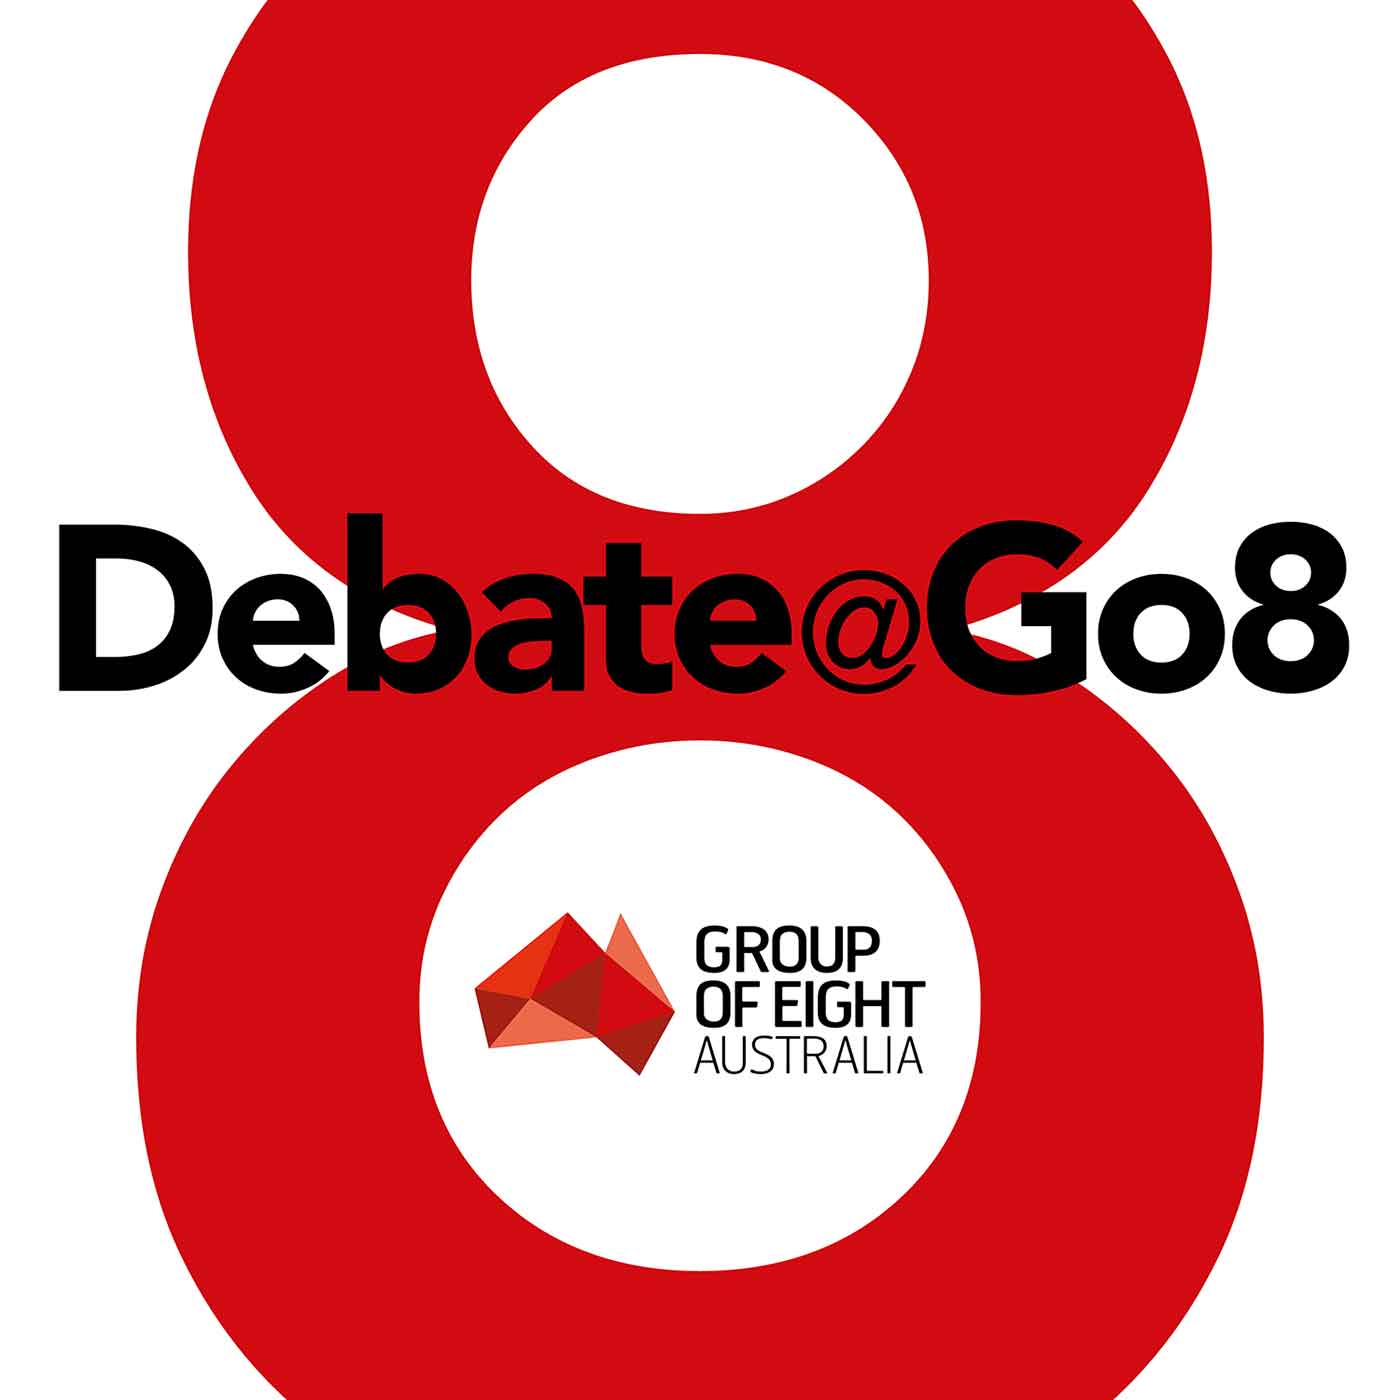 Debate@Go8